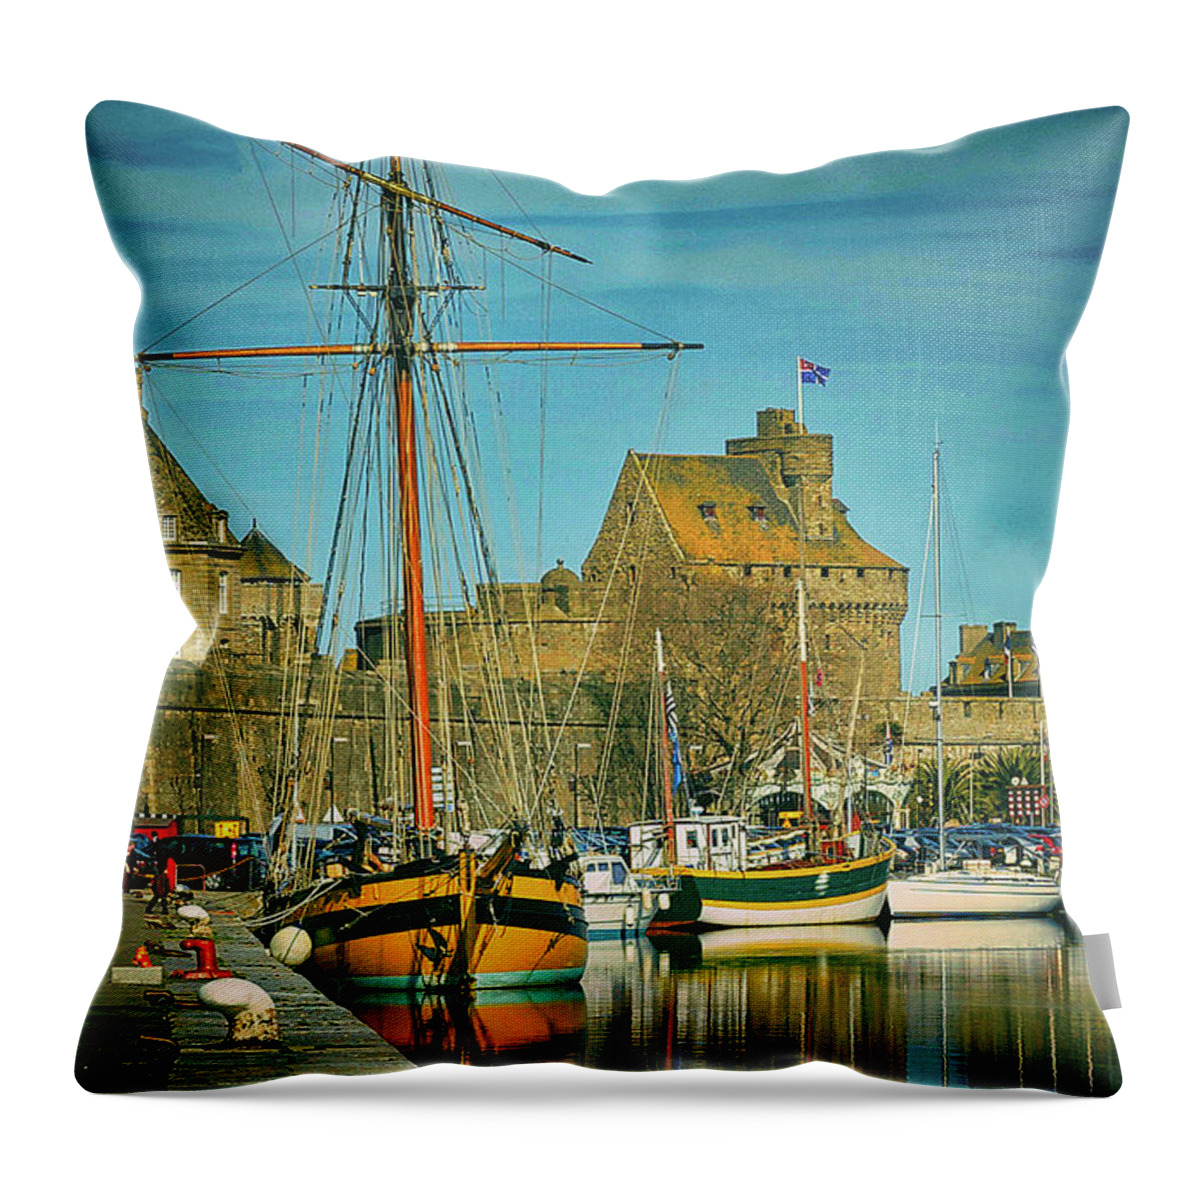 Vauban Bassin Throw Pillow featuring the photograph Tall Ship in Saint Malo by Elf EVANS